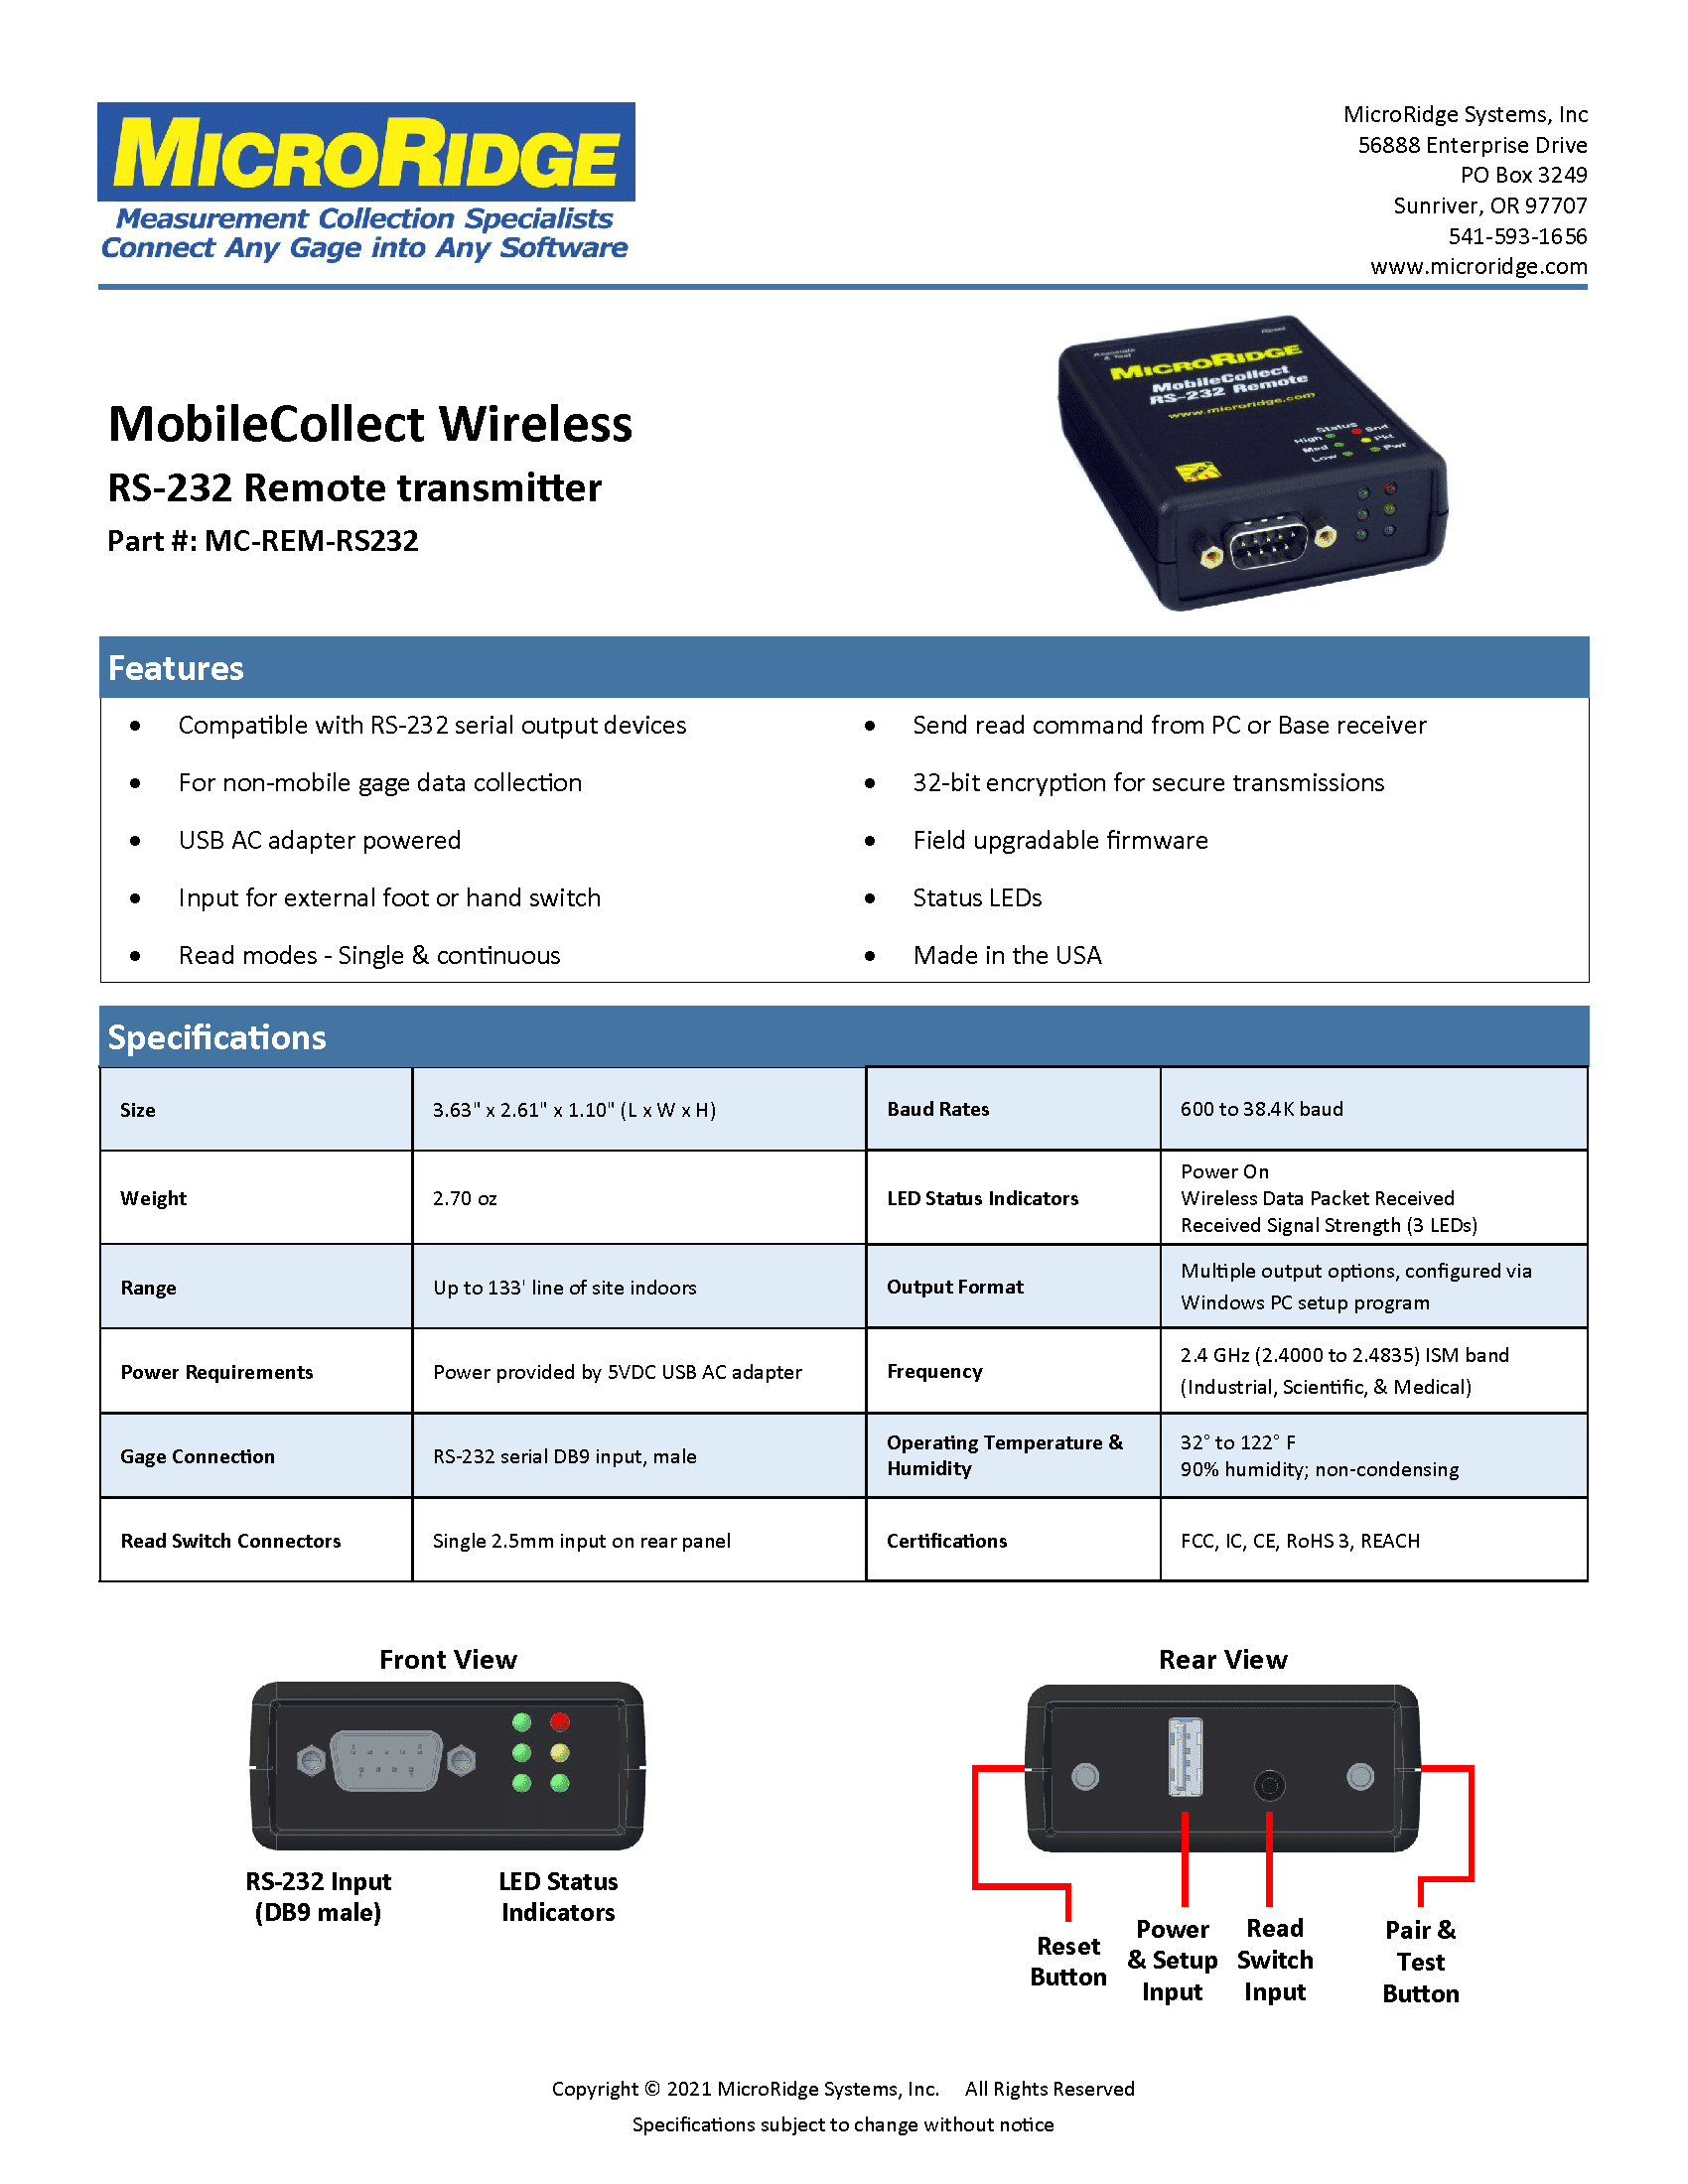 RS-232 Remote Spec Sheet